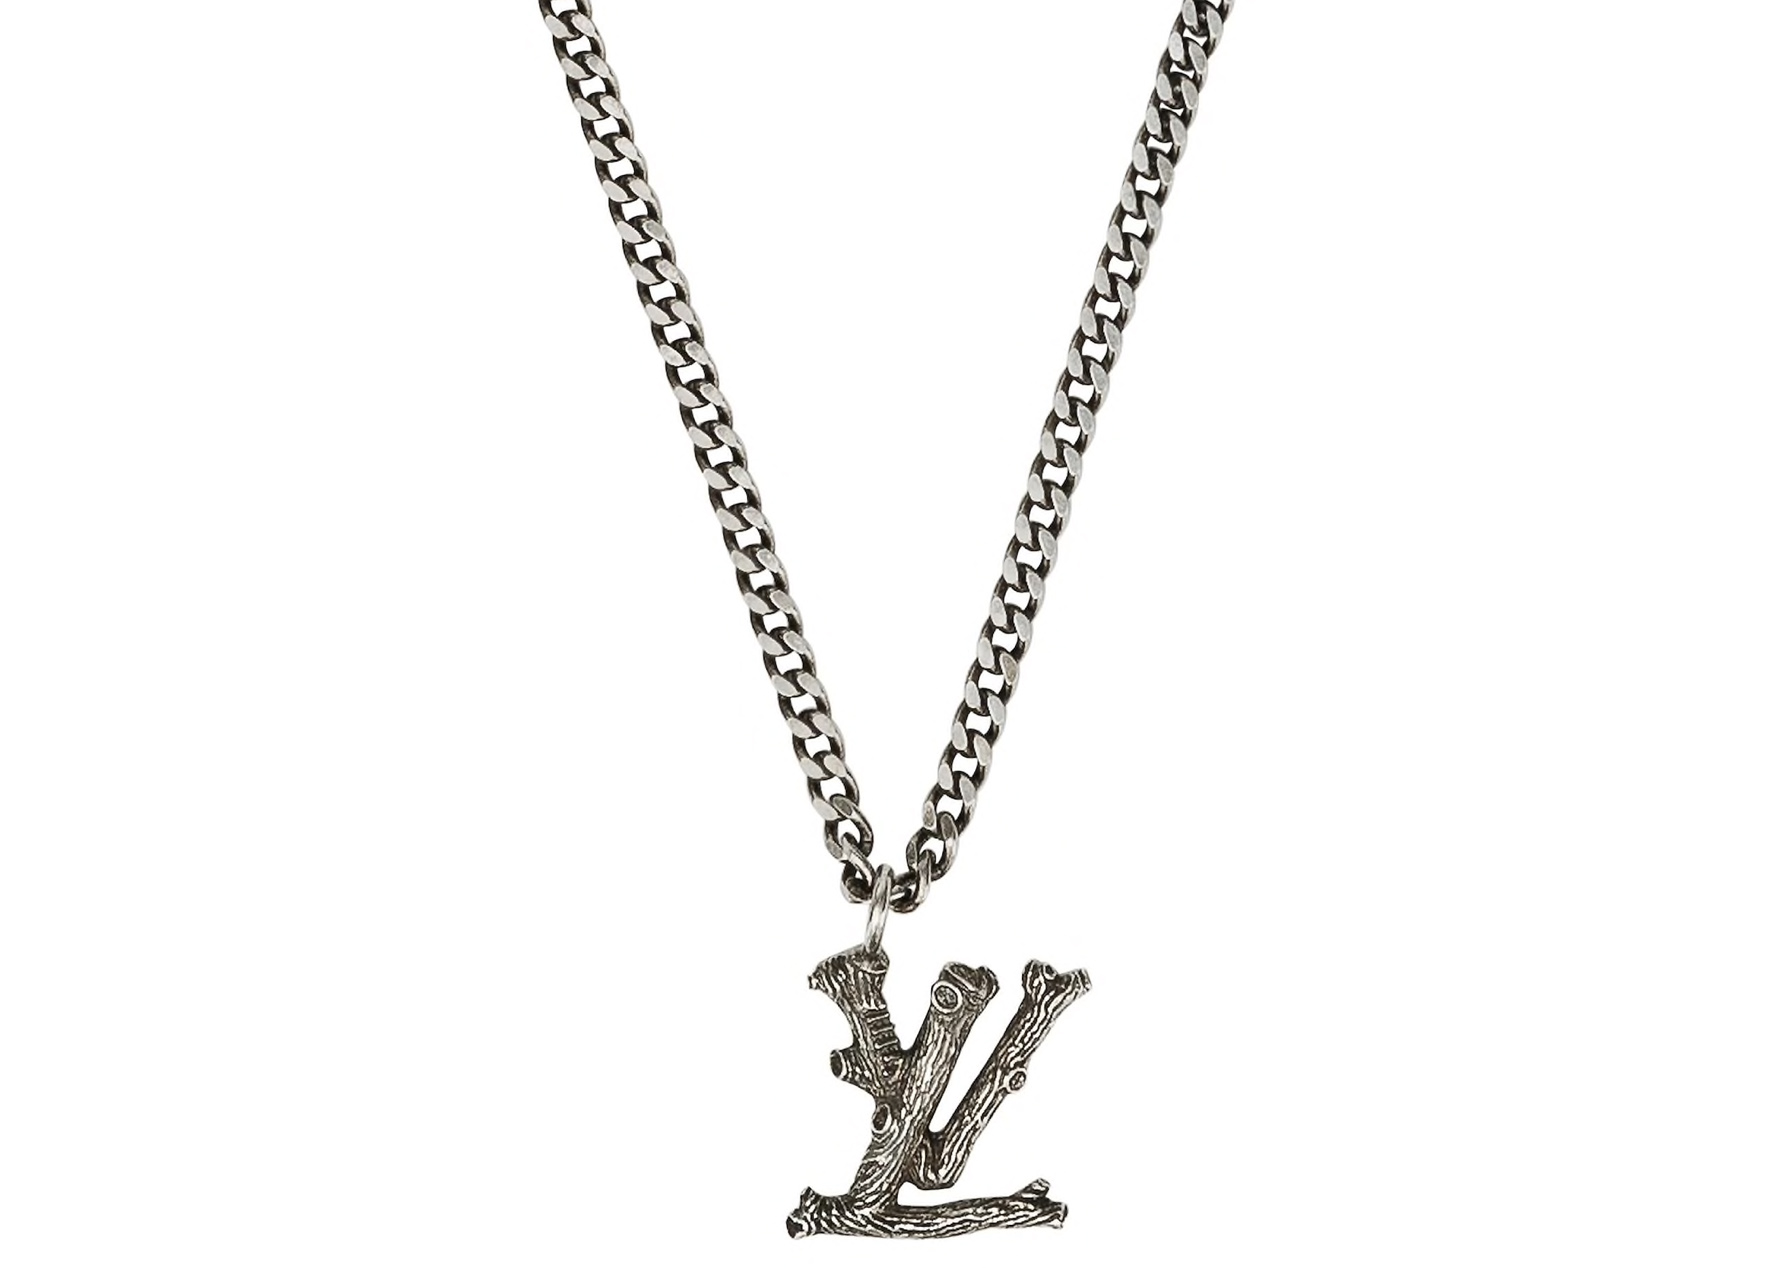 Louis Vuitton Idylle Blossom LV Bracelet, White Gold and Diamond Grey. Size NSA